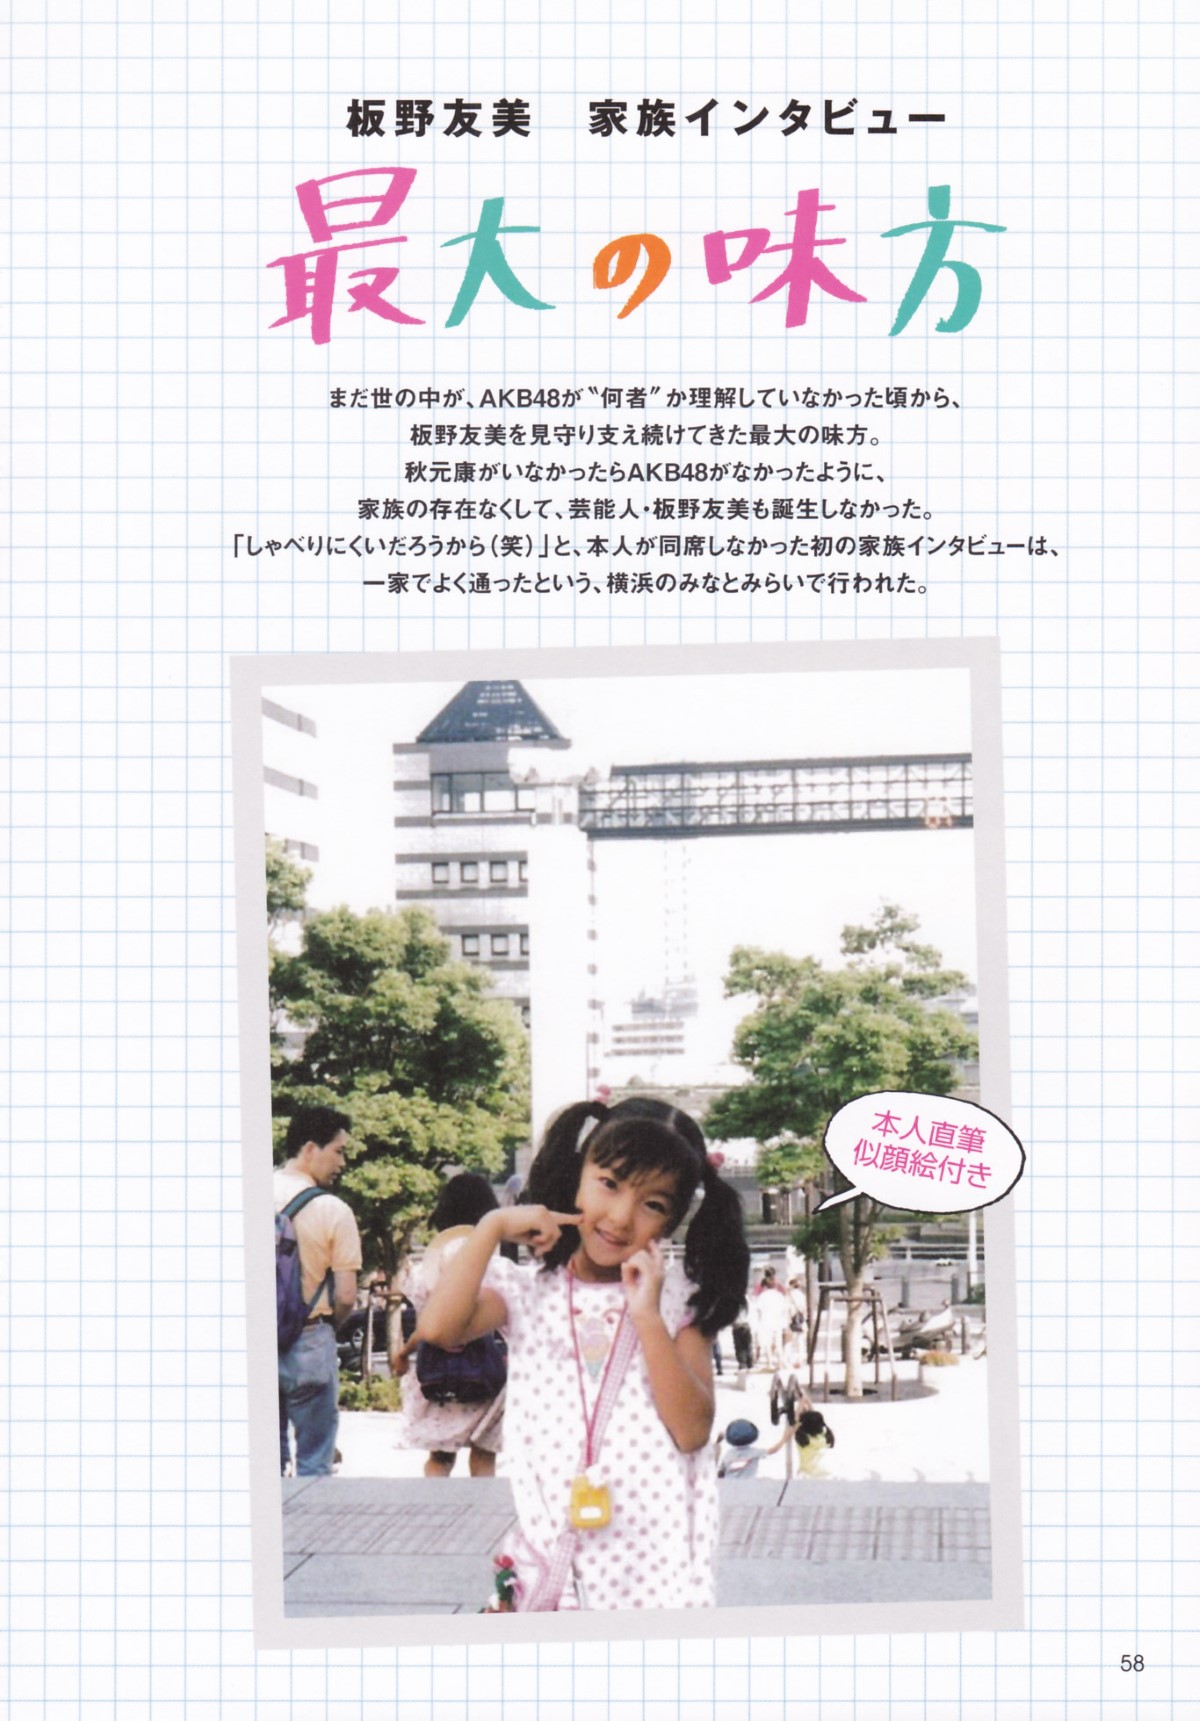 Photobook Tomomi Itano 板野友美 KB48 Graduation Commemorative Photobook Tomochin 0011 5288756341.jpg